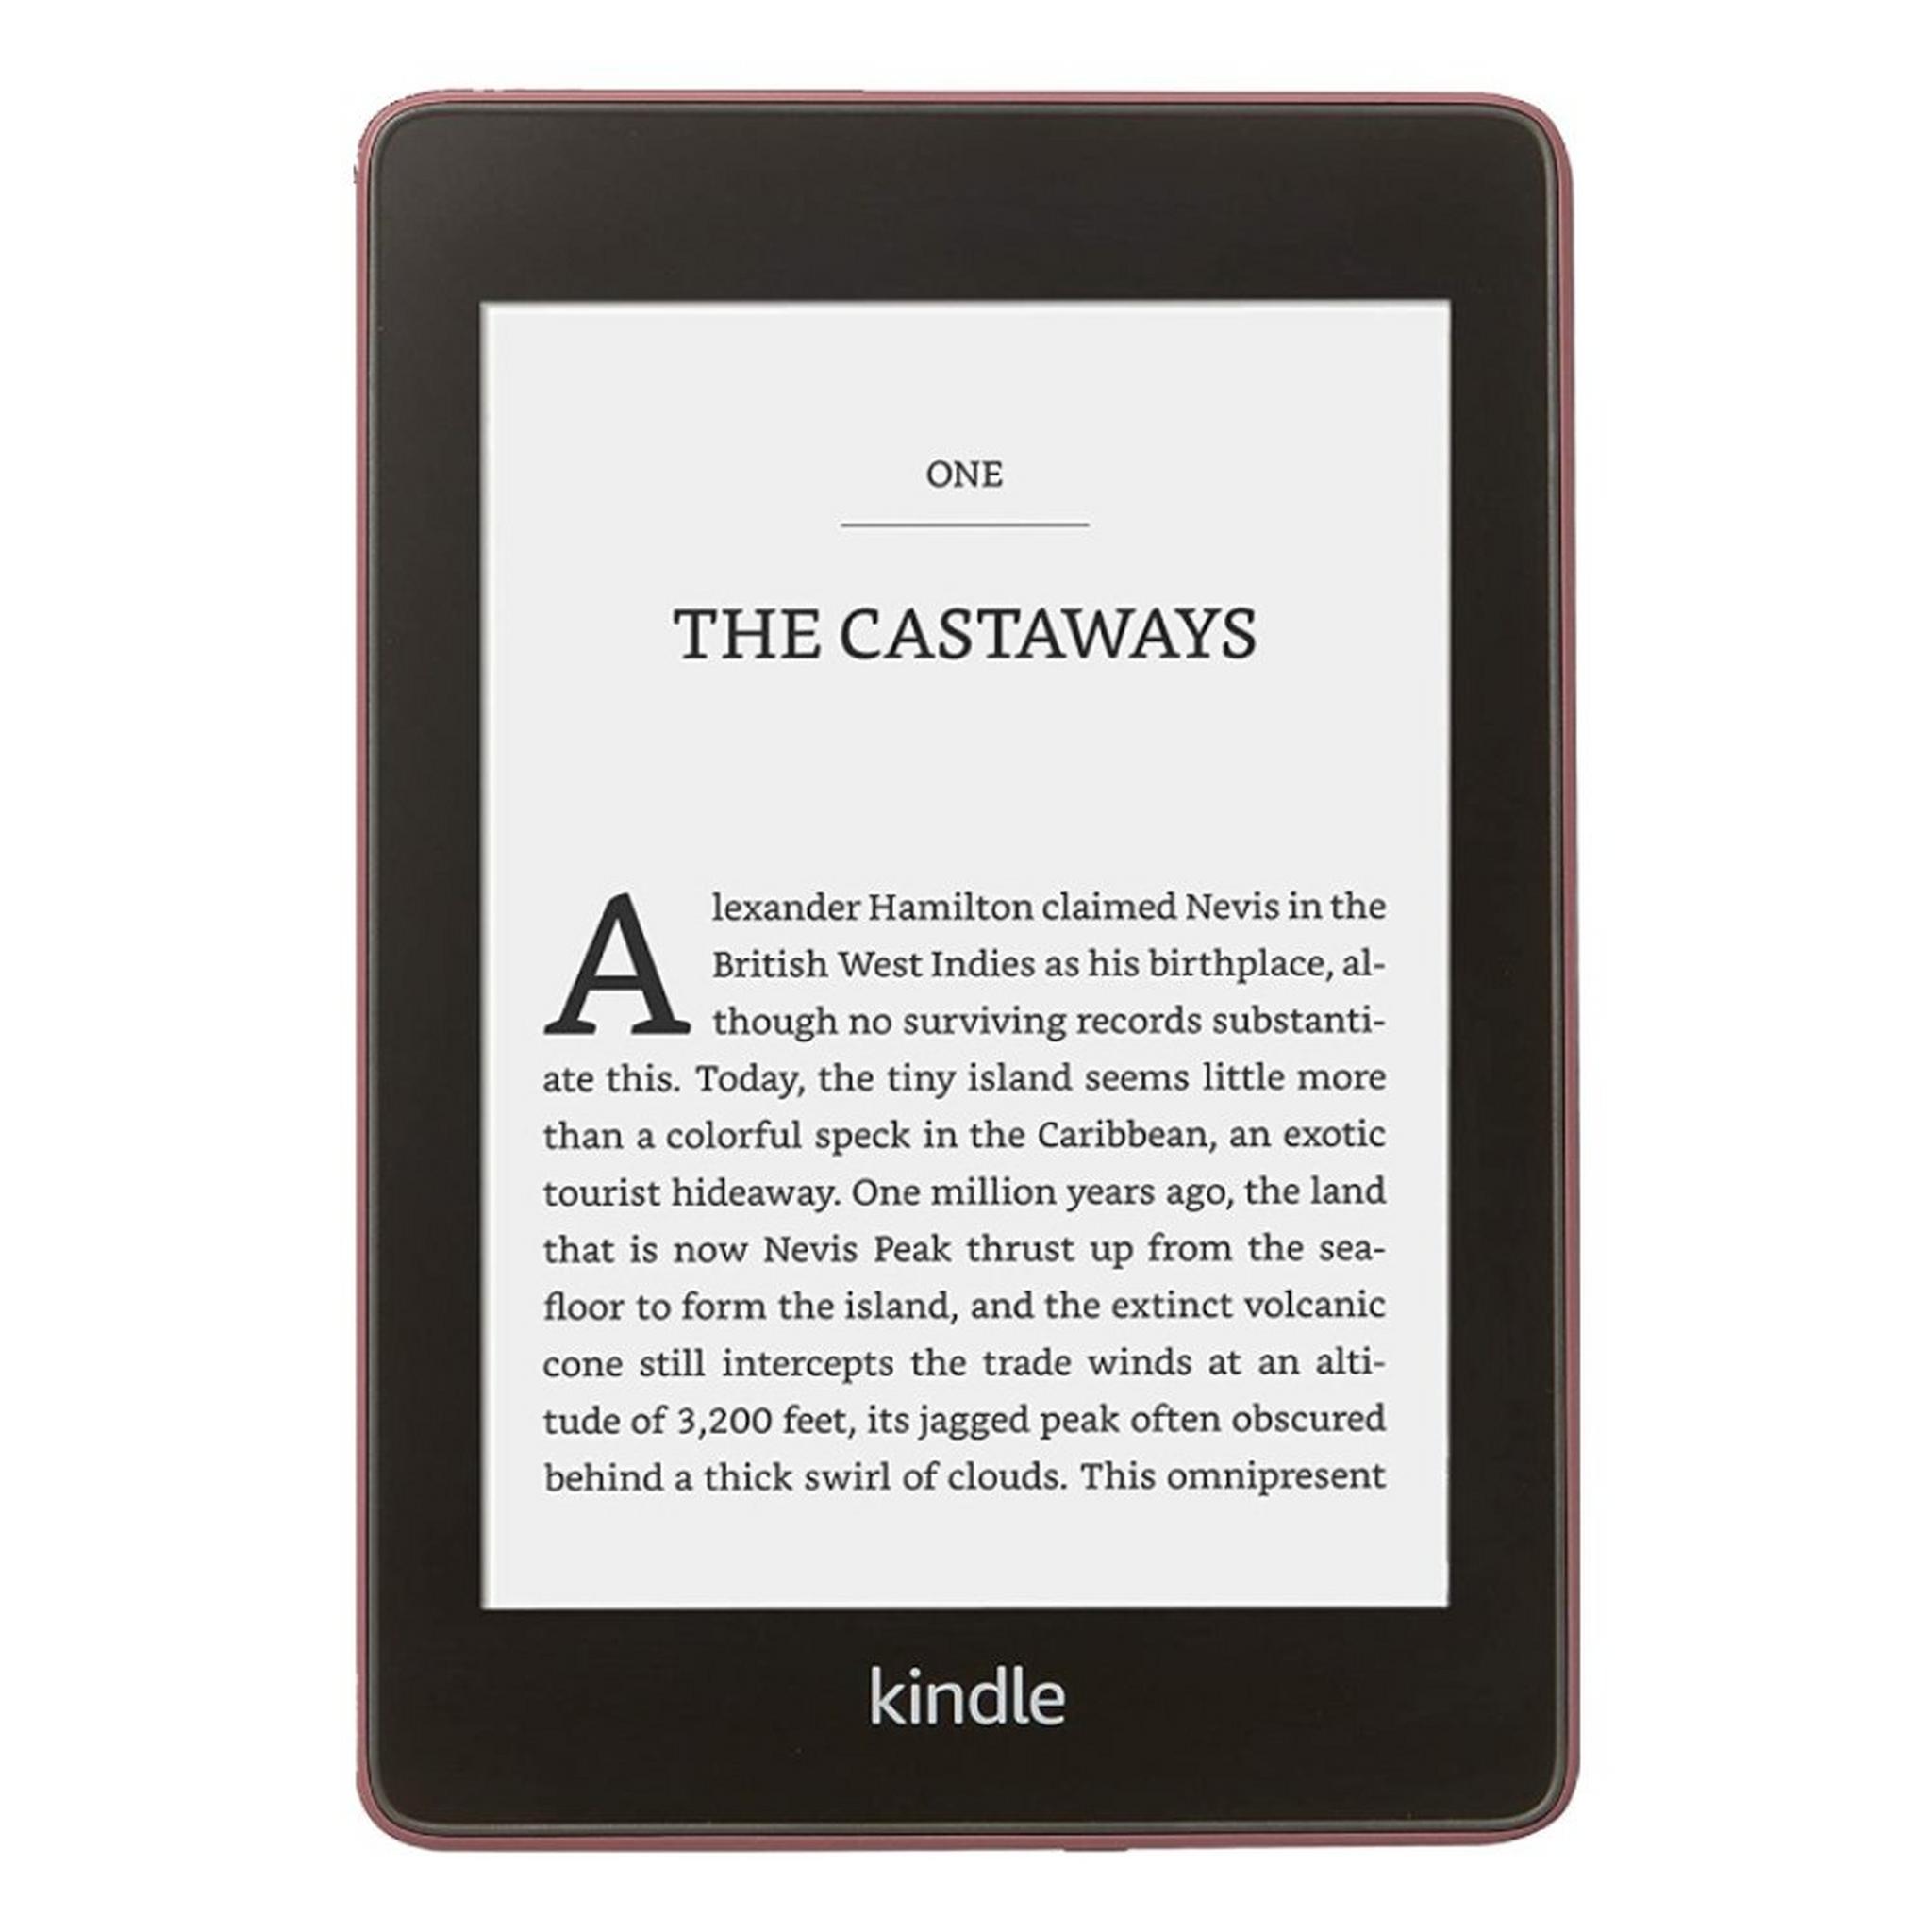 Amazon Kindle Paperwhite 8GB Tablet - Plum